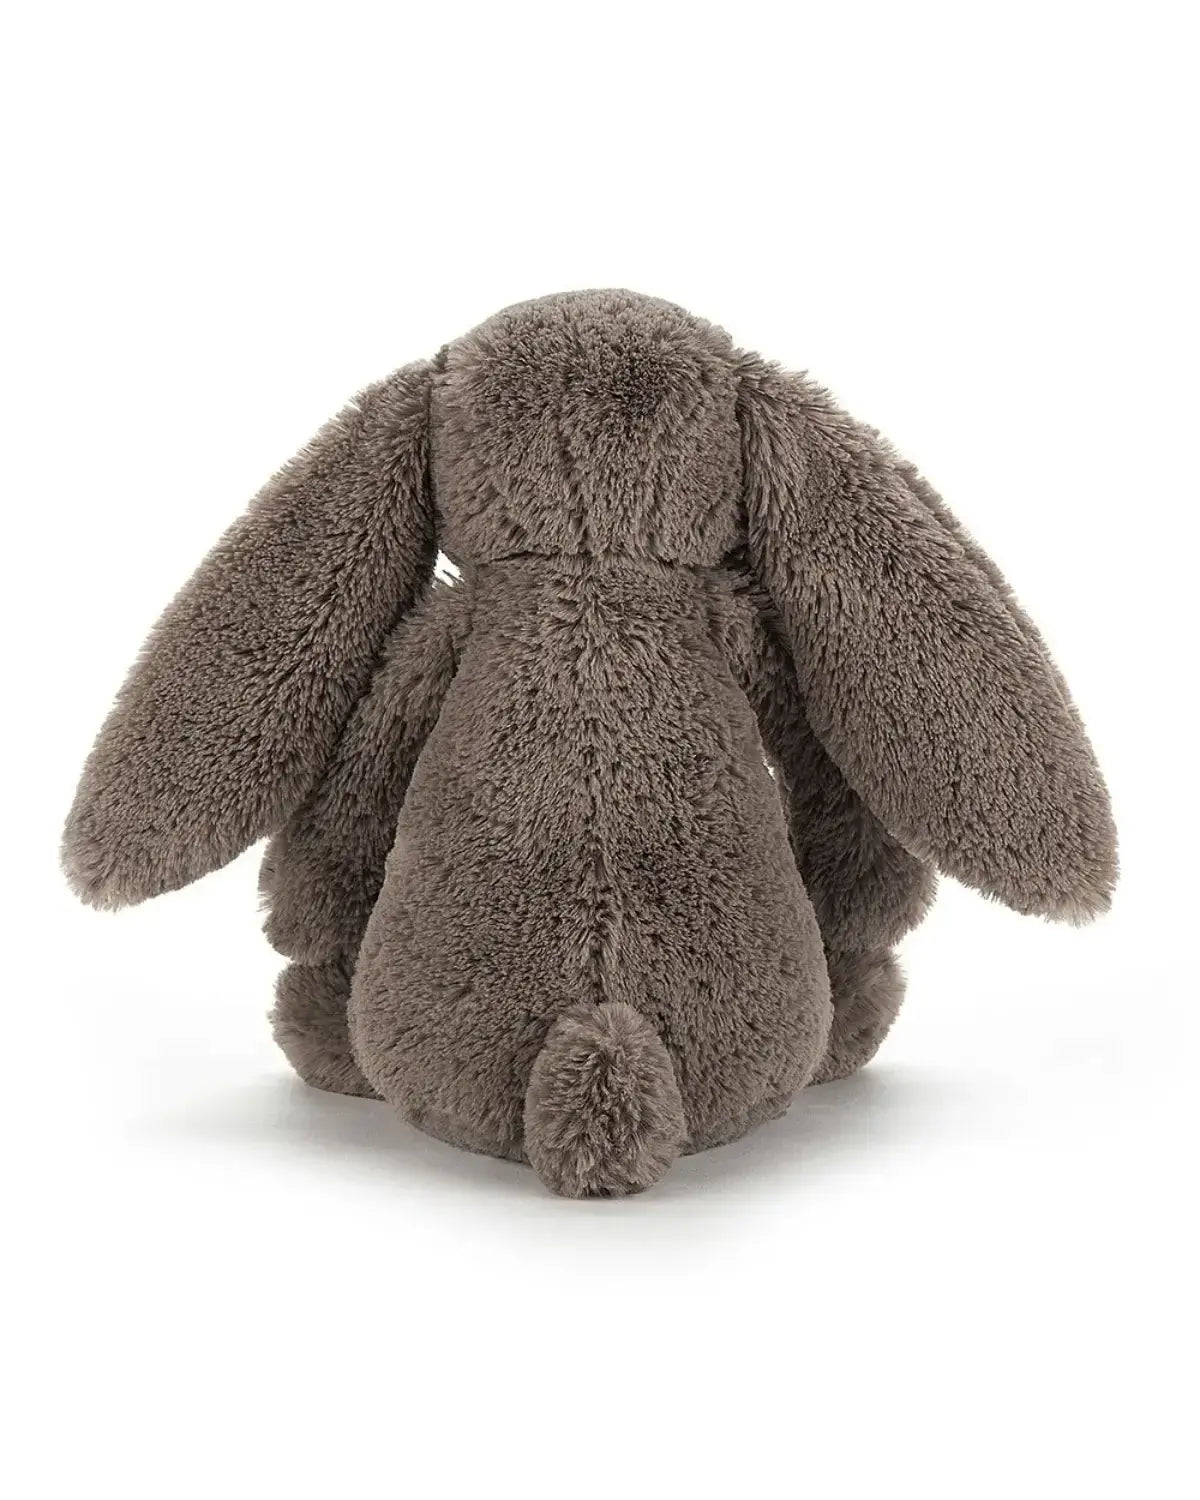 Jellycat Bashful Bunny - Truffle (Medium)